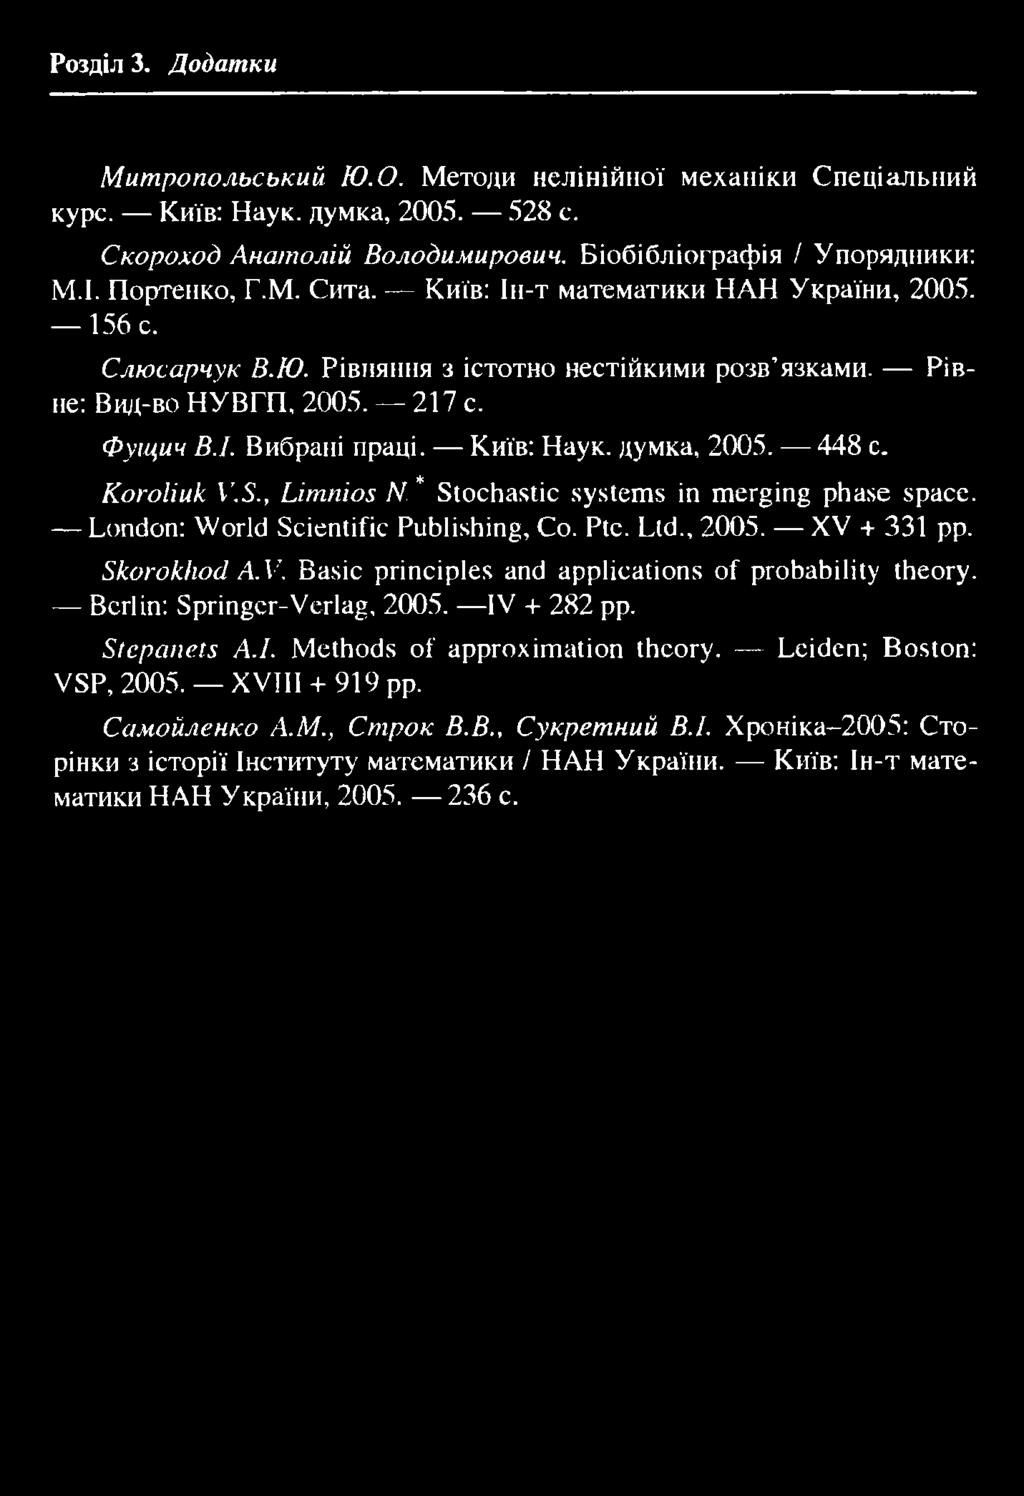 448 с. Koroliuk V'.S., Limnios N* Stochastic systems in merging phase space. London: World Scientific Publishing, Co. Ptc. Ltd., 2005. XV + 331 pp. Skorokhod A.V. Basic principles and applications of probability theory.